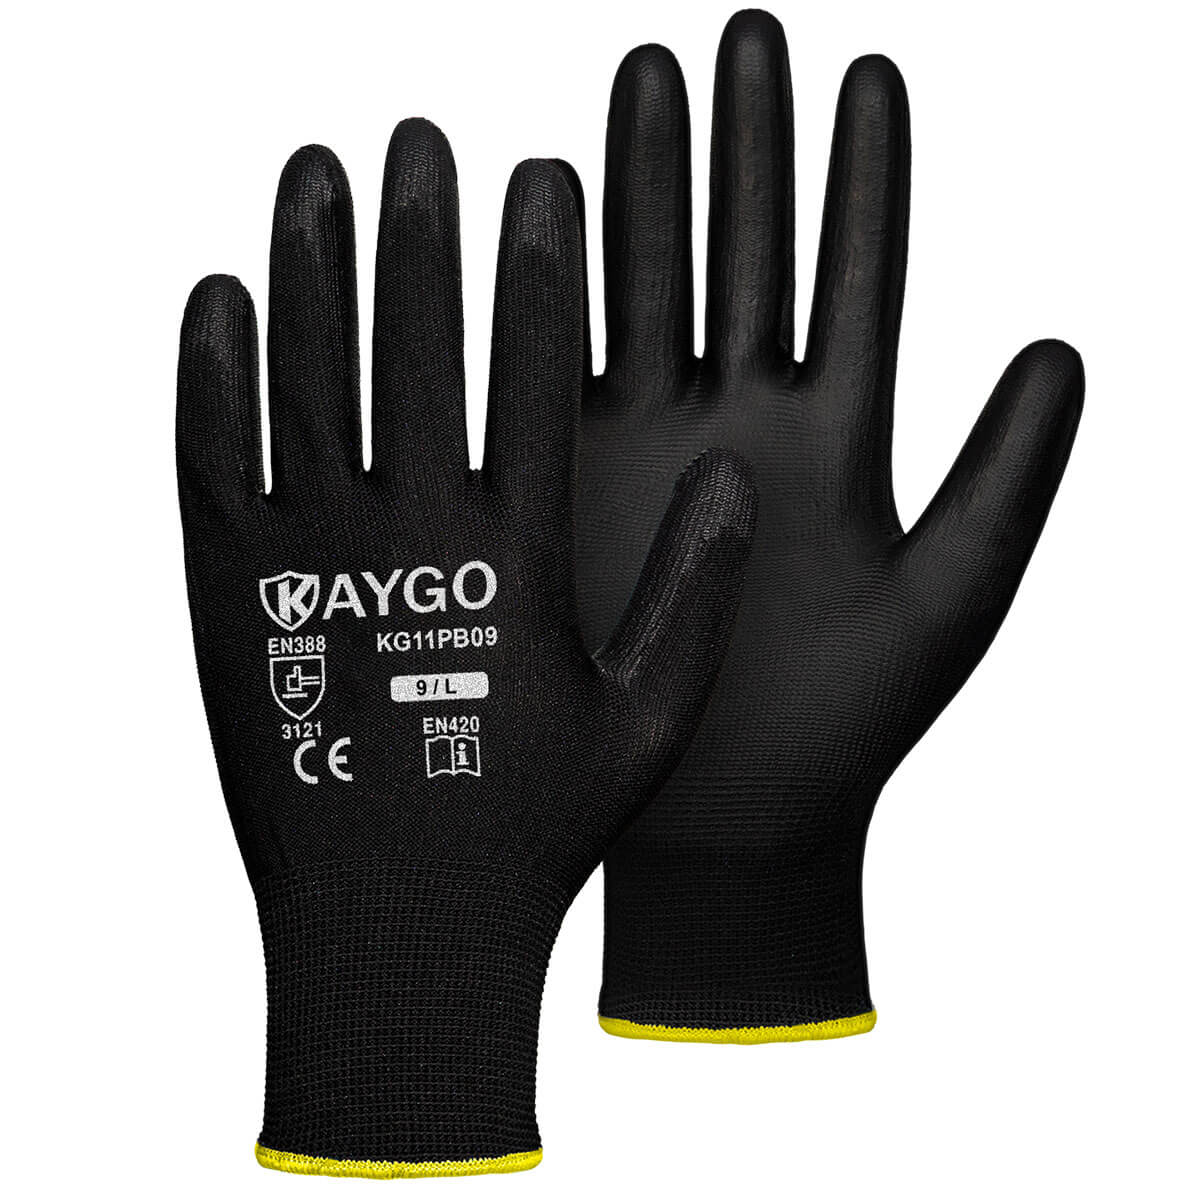 Work Gloves-Pu Coated,12 Pairs,Thin Garden Gloves for Men Women,Ideal for  Light